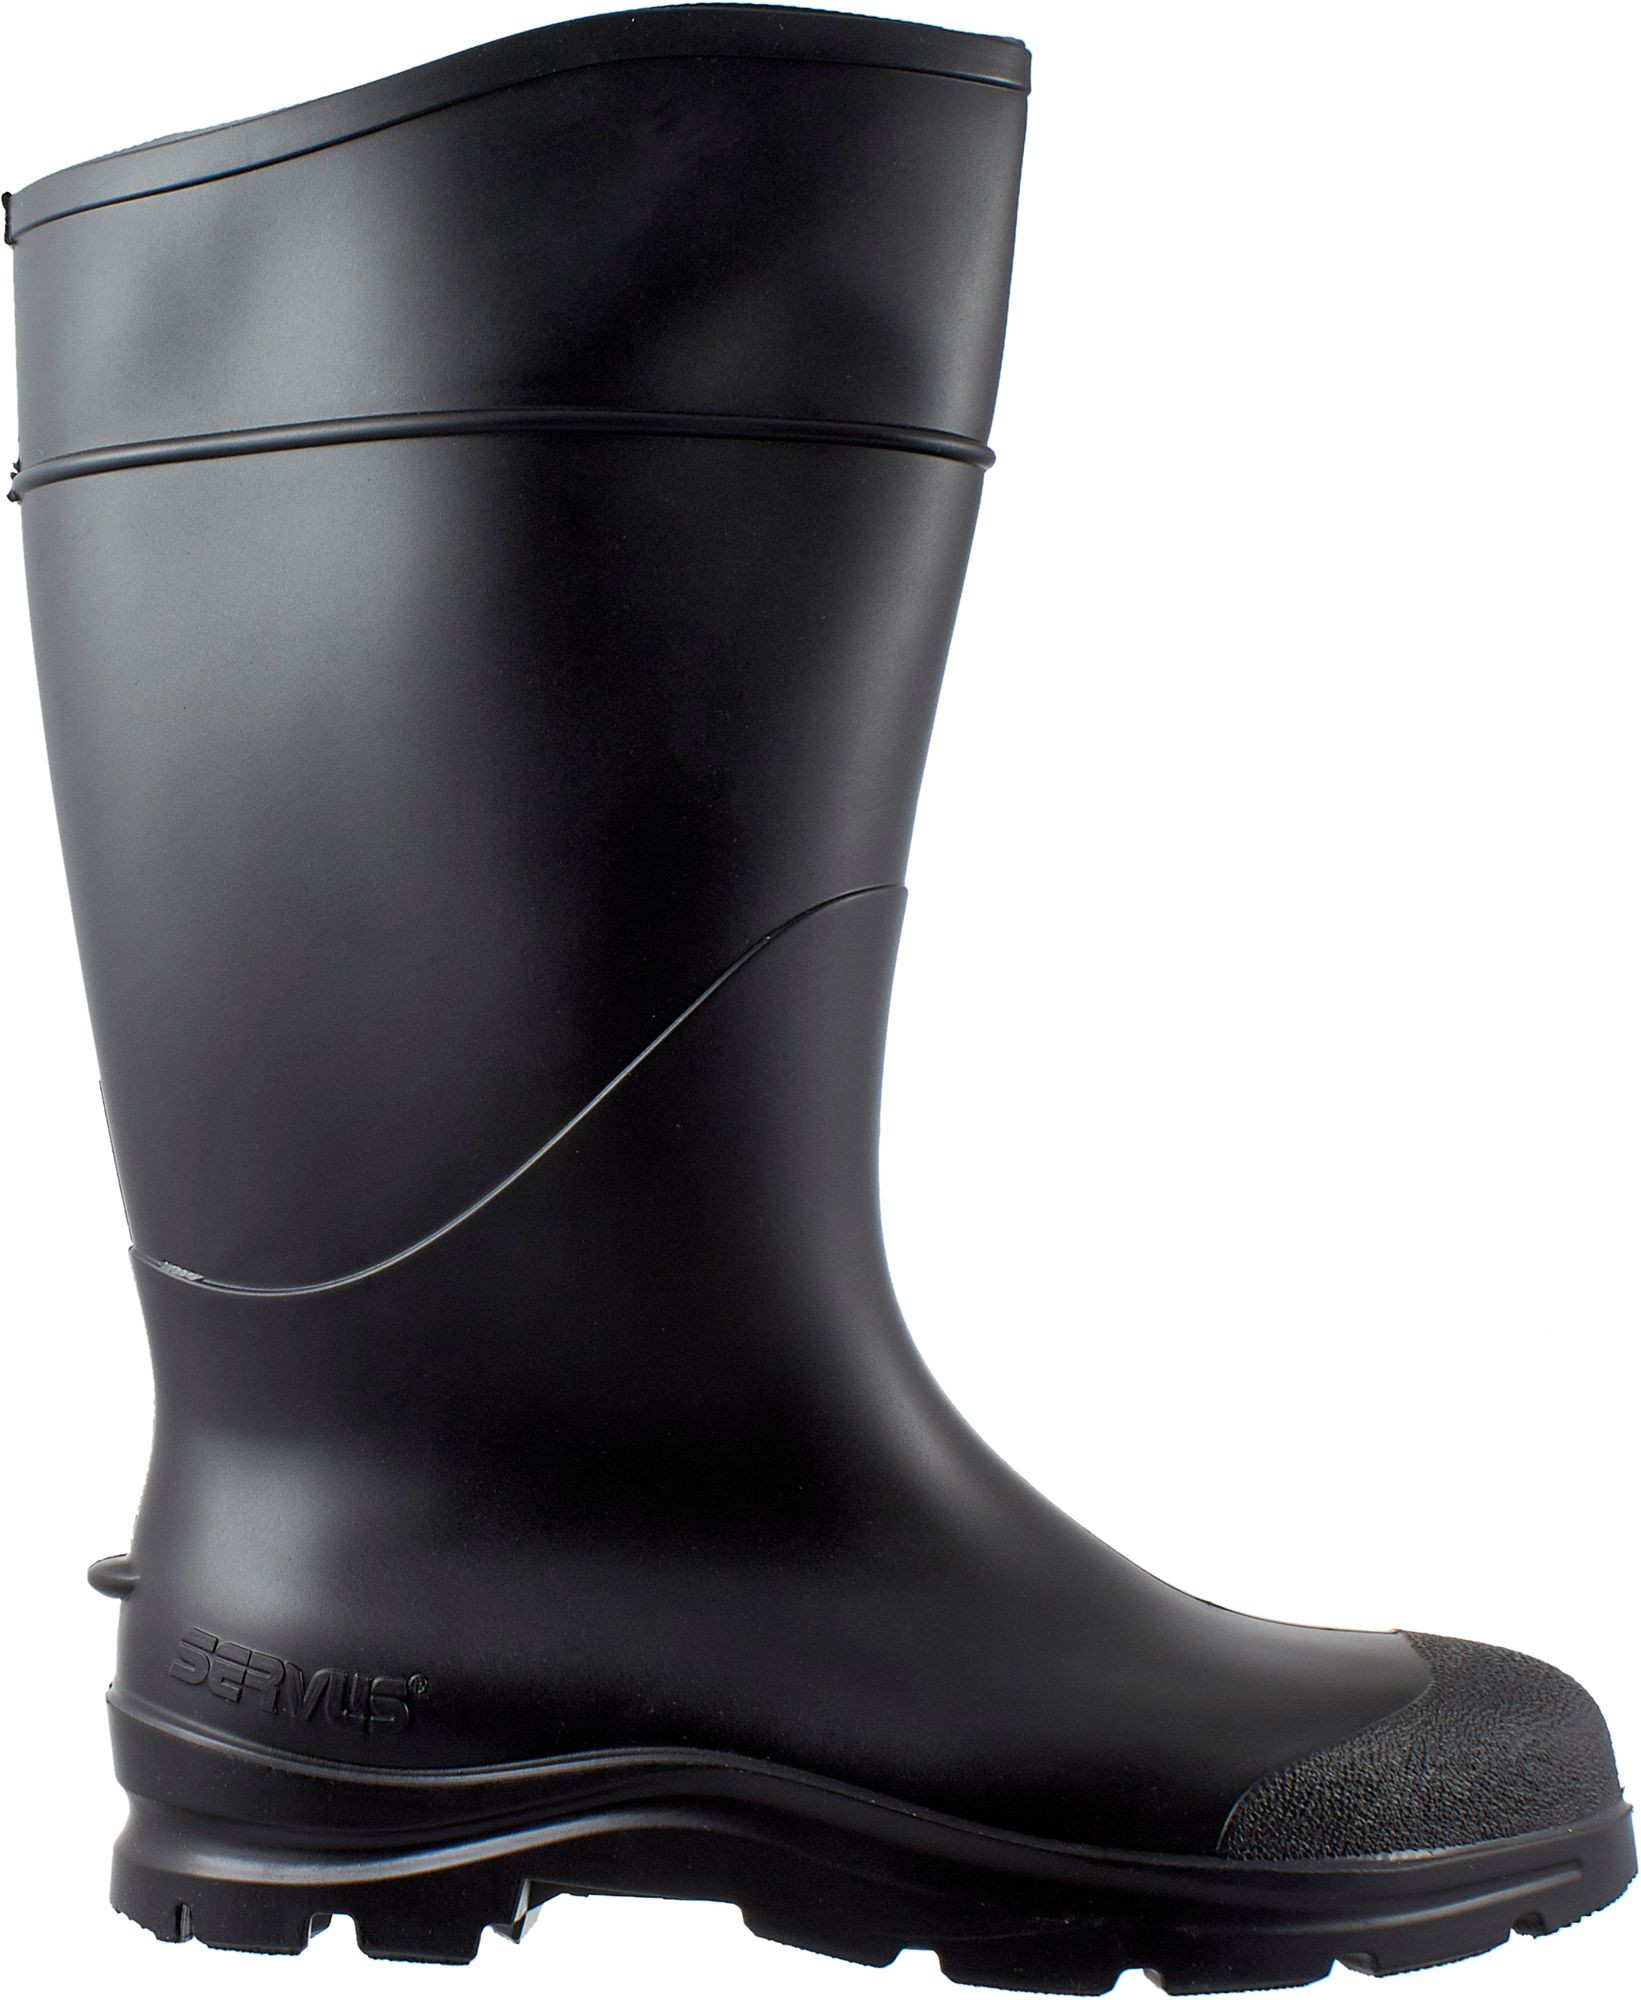 black rubber boot